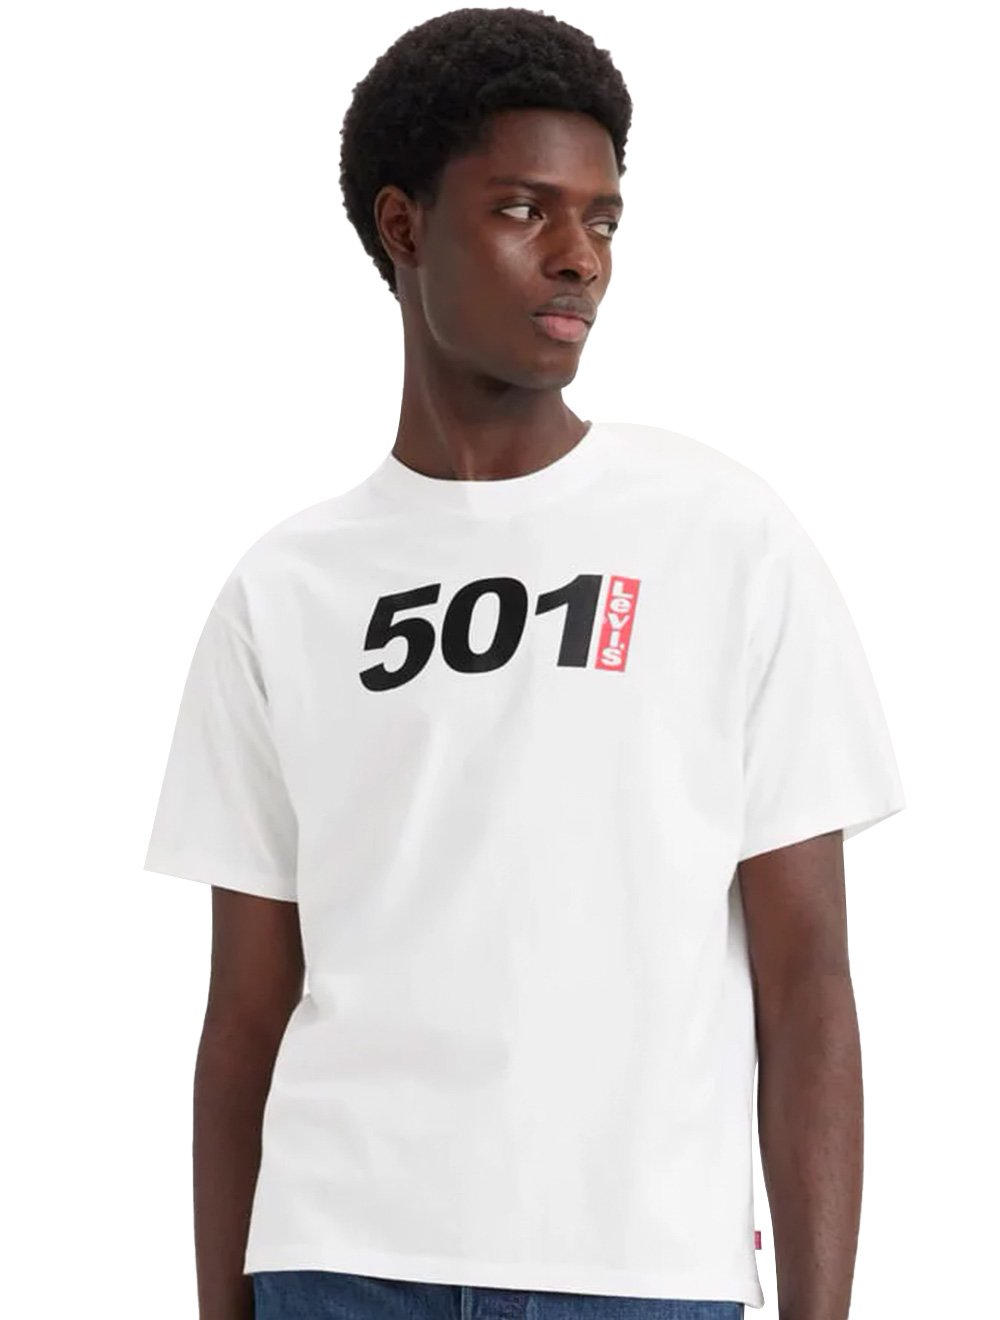 Camiseta Levis Masculina Vintage Fit Graphic 501 Logo Off-White